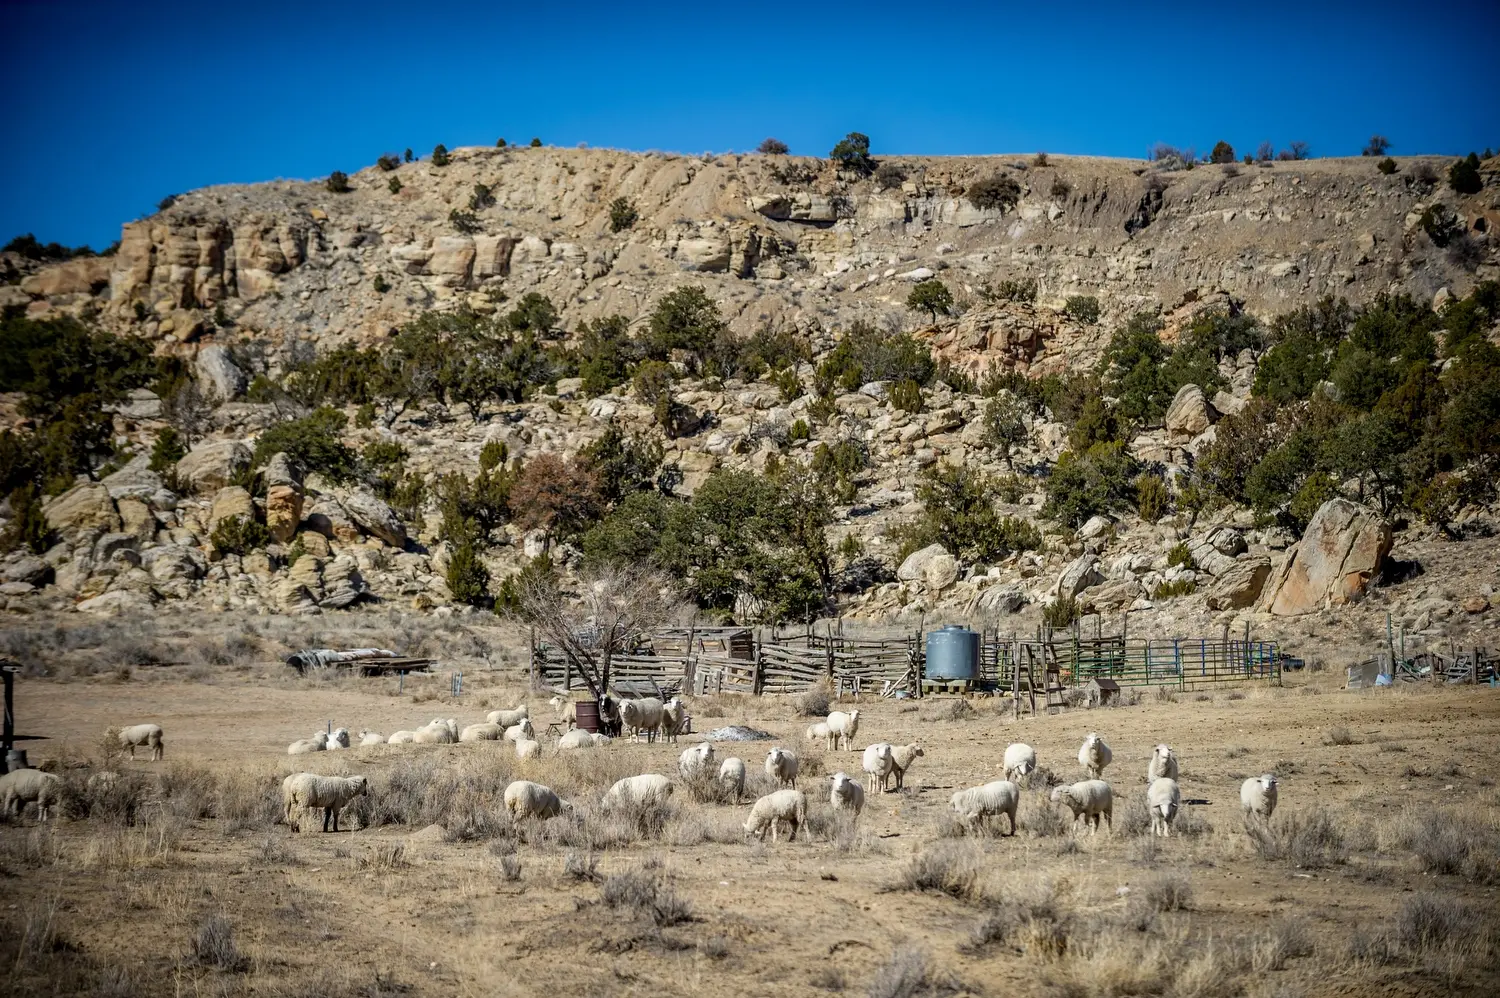 Sheep graze on vegetation below the Claim 28 uranium mine site in Blue Gap, Ariz. Image by Mary F. Calvert. United States, 2020.